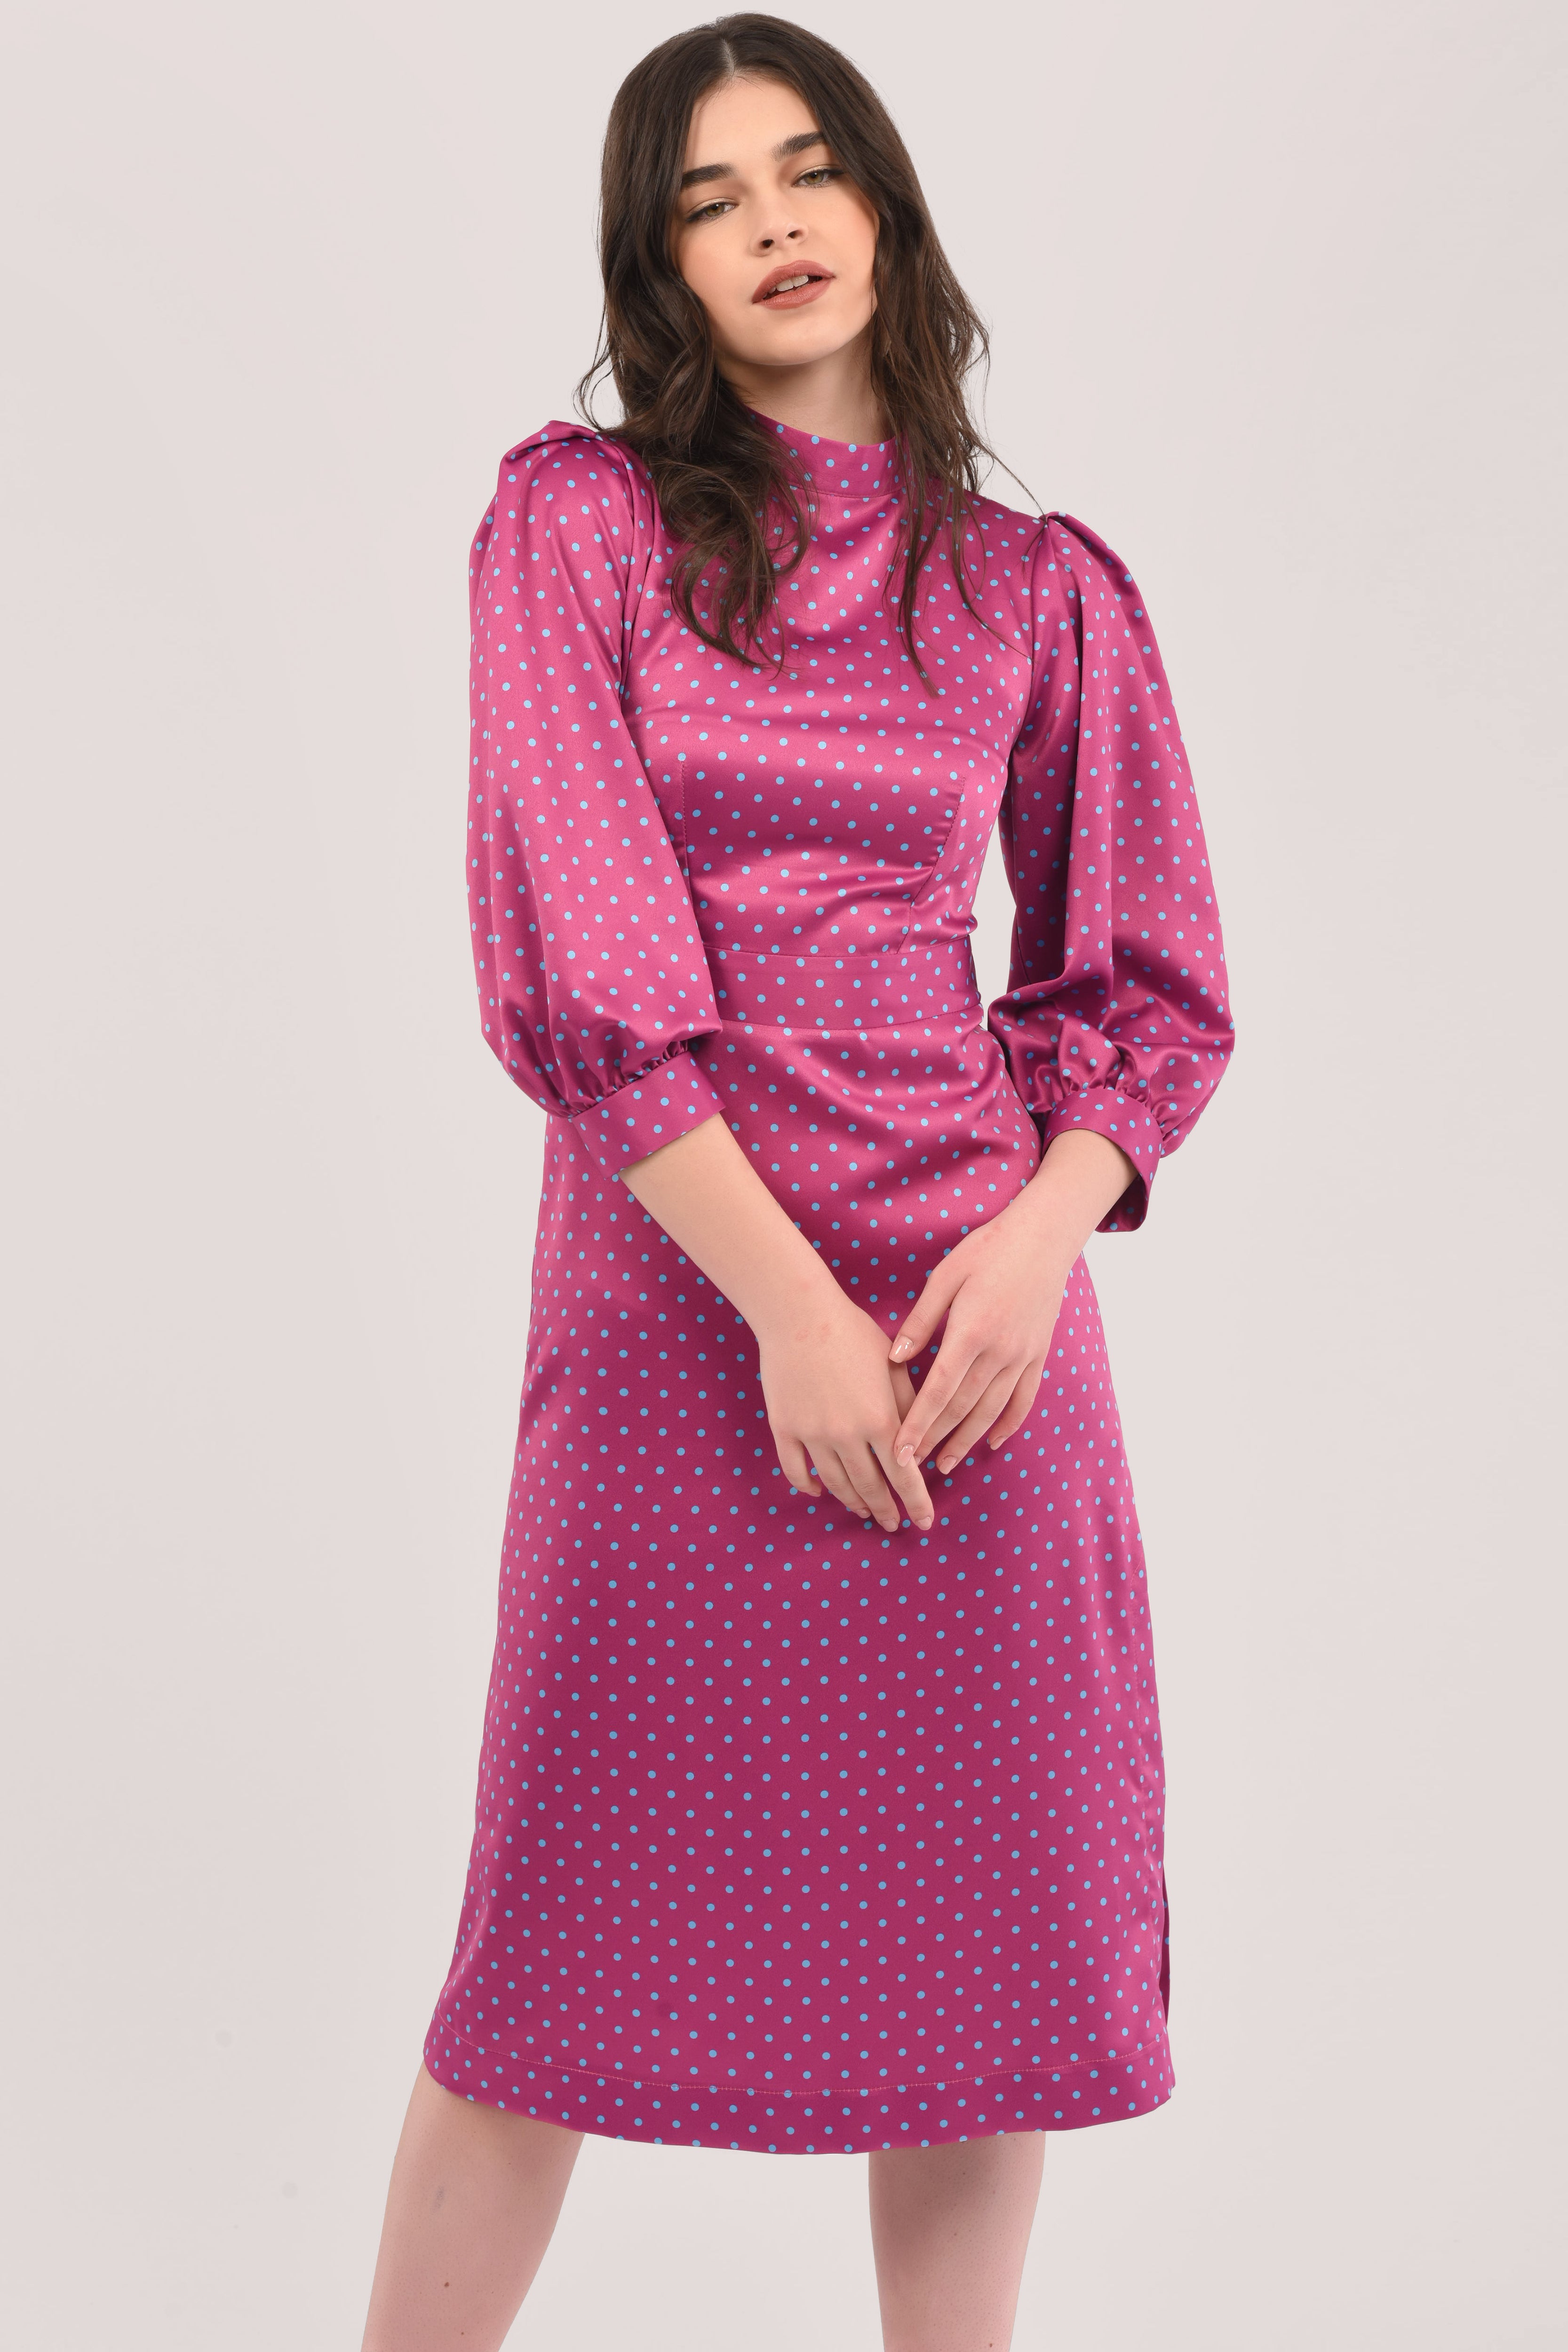 Pleated Sleeve Polka Dot Dress Closet